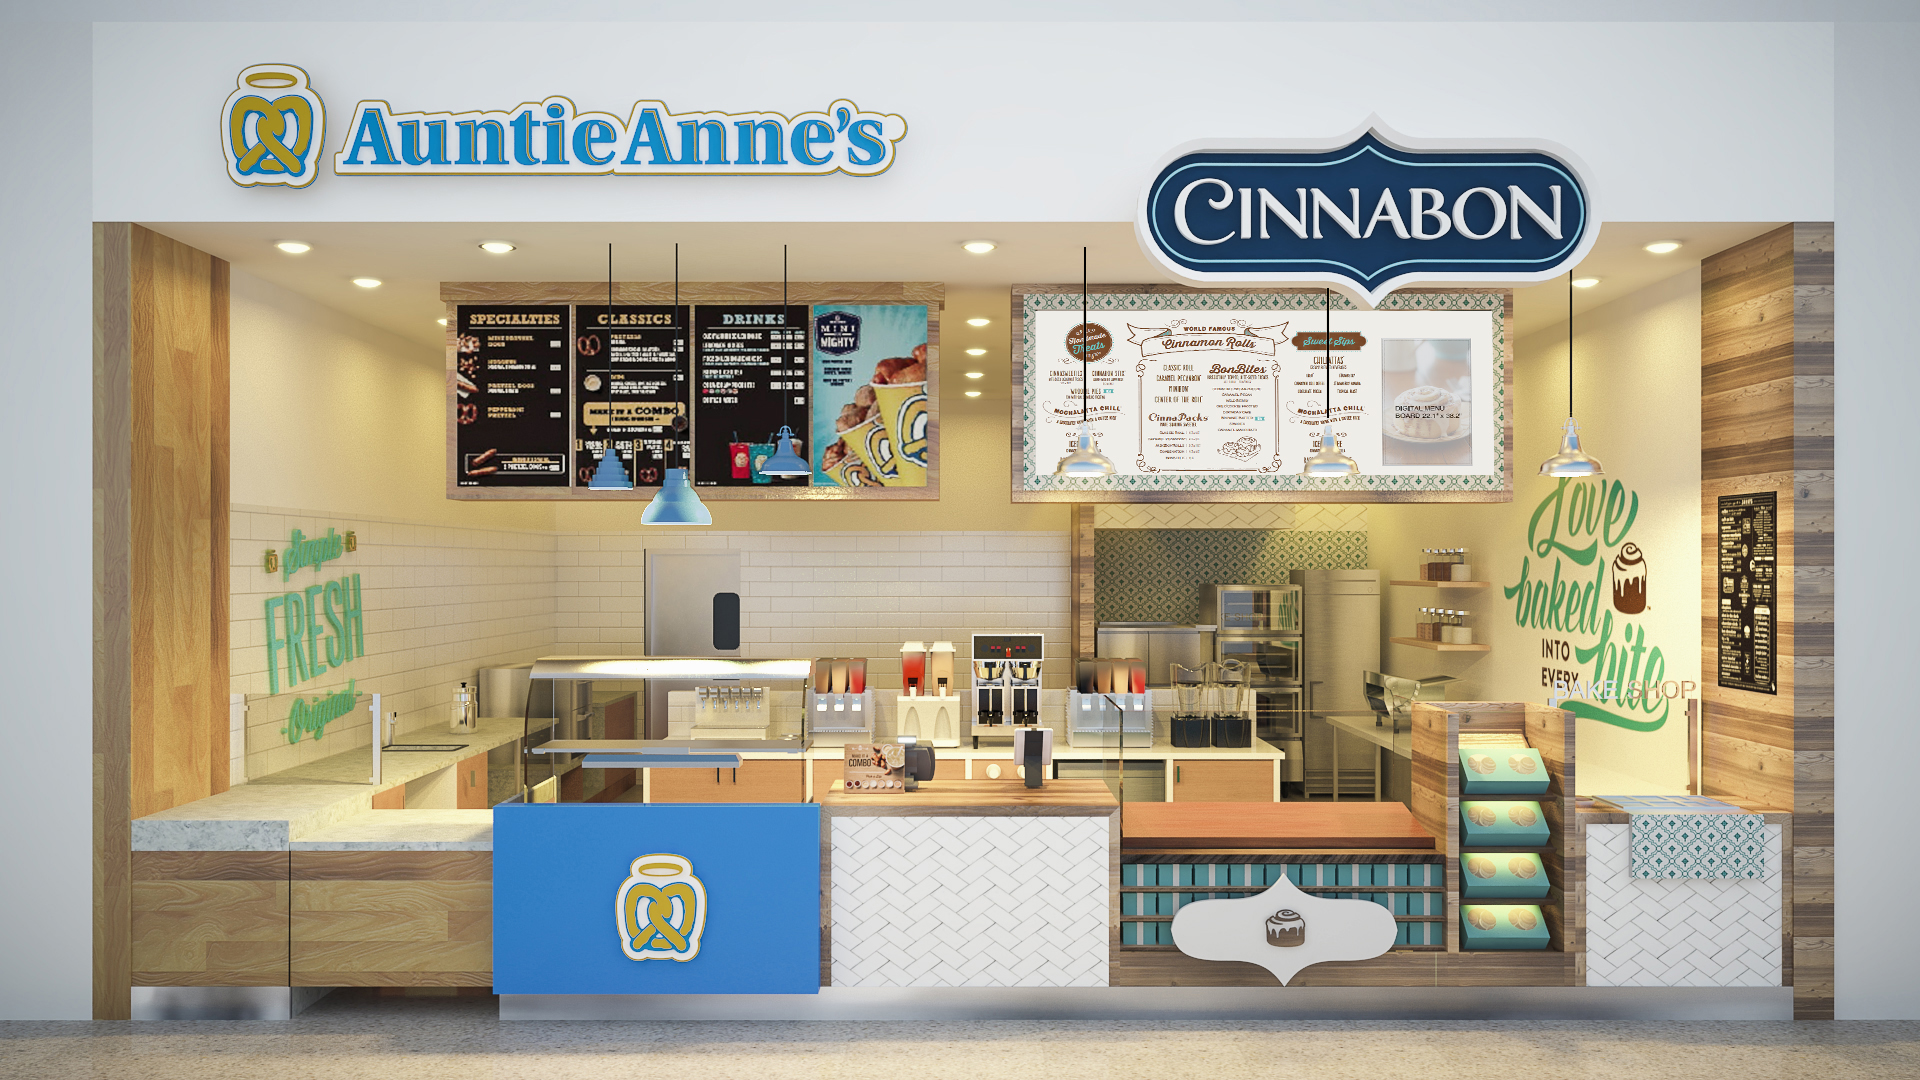 Auntie Anne's dual branding opportunities